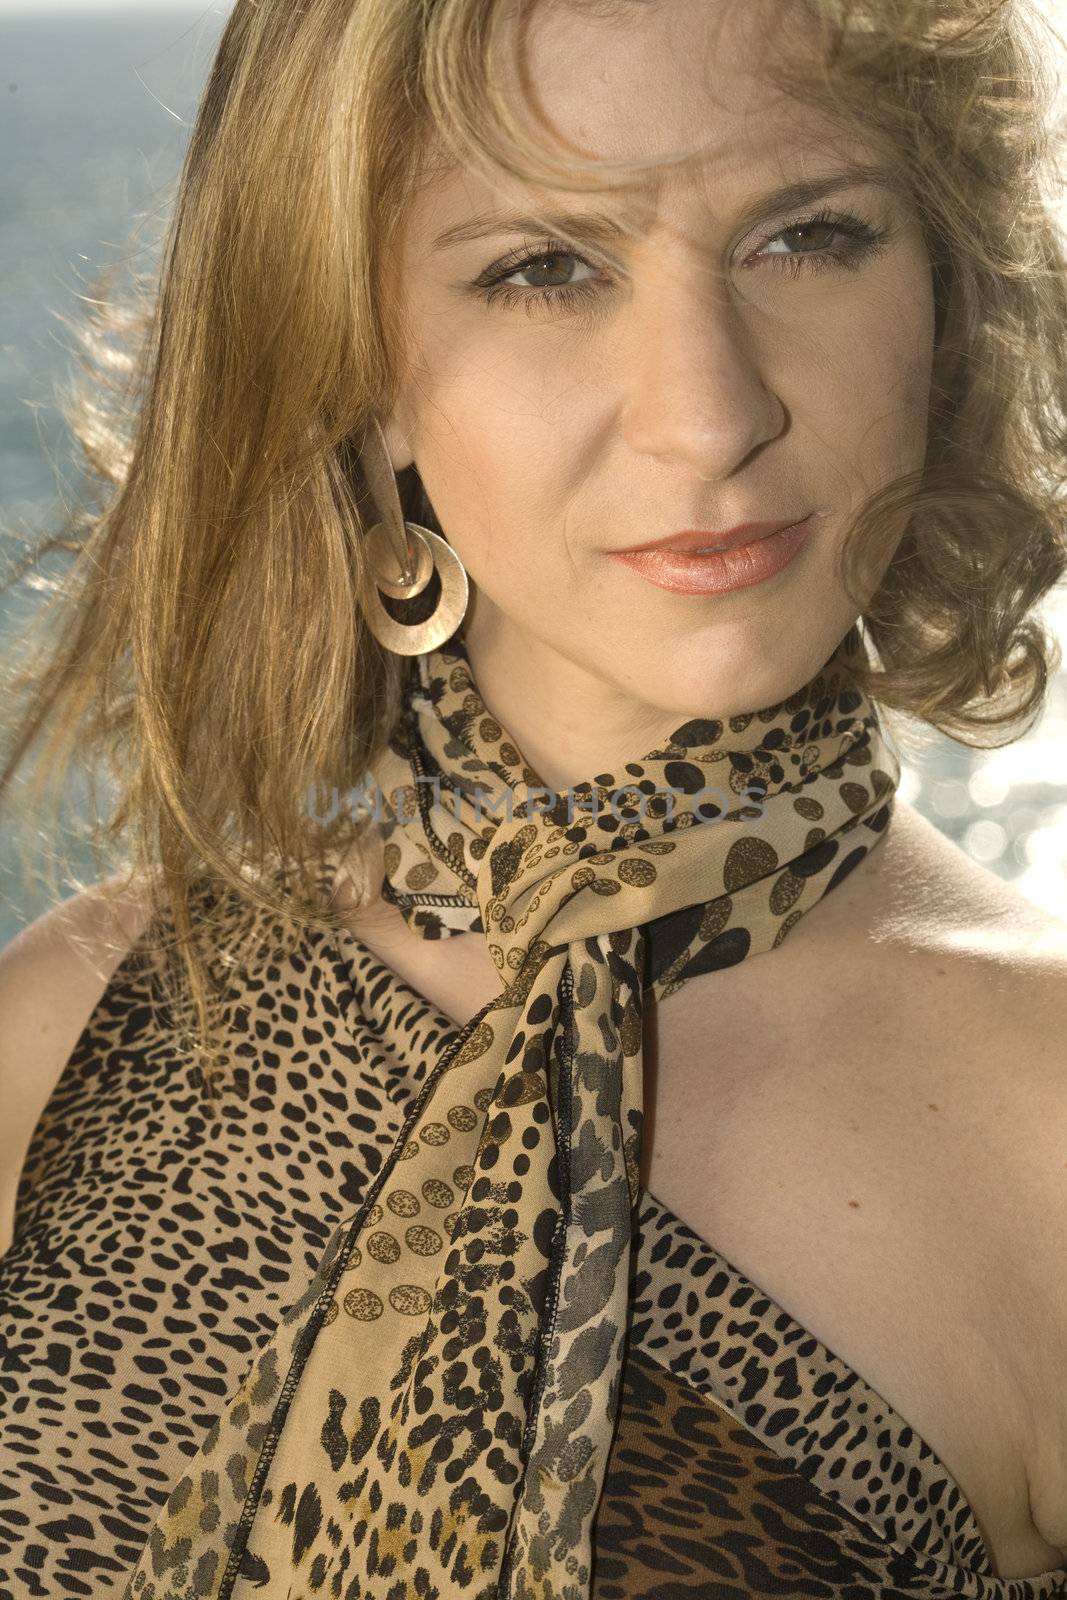 A young blond brazilian woman in a leopard skin like blouse.